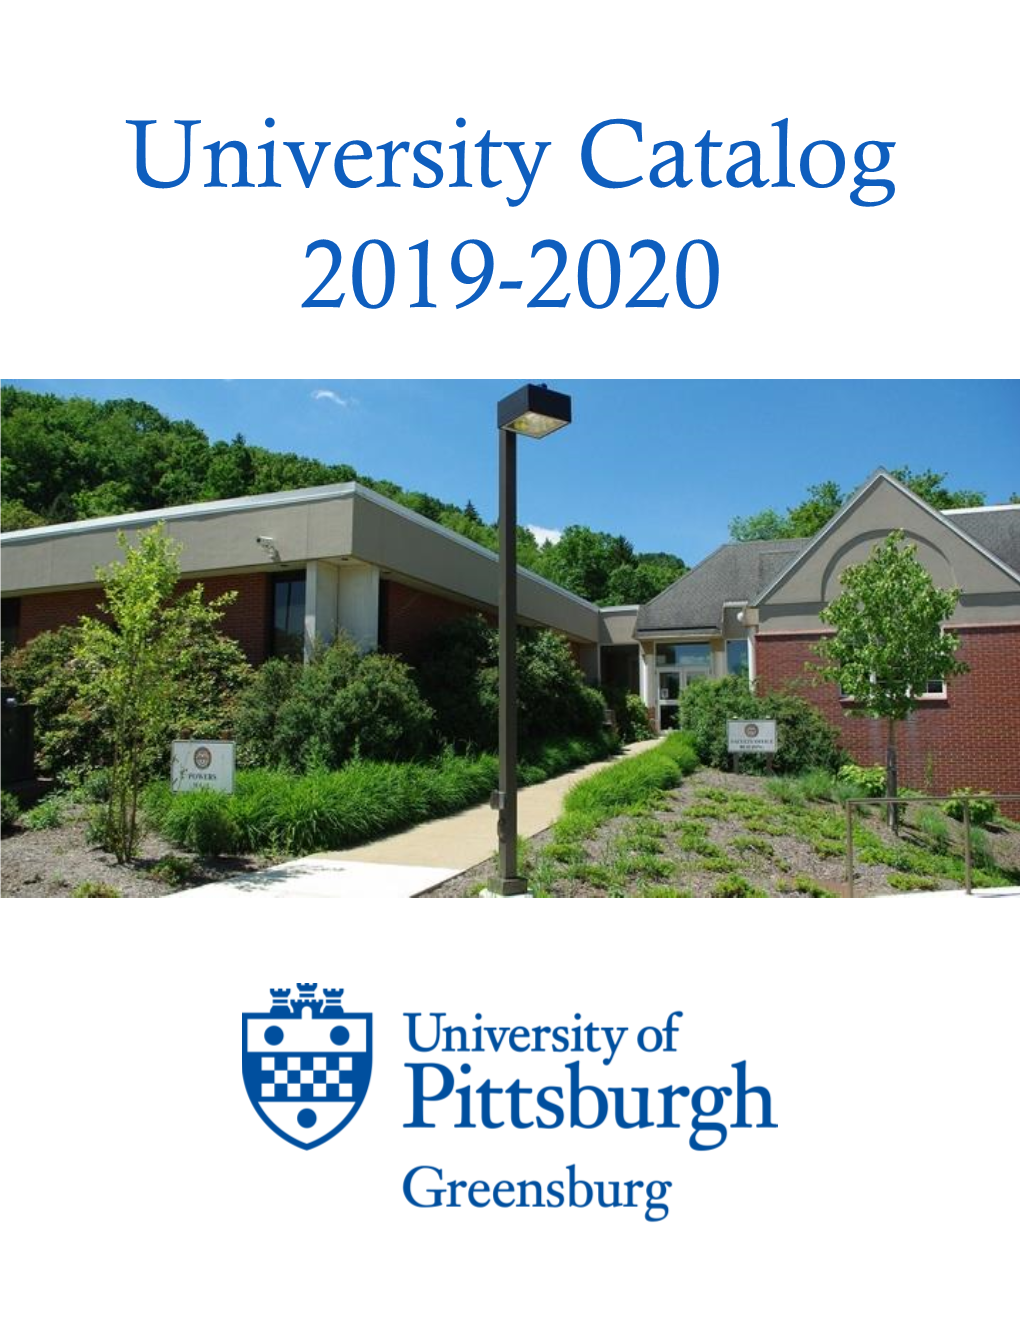 University Catalog 2019-2020